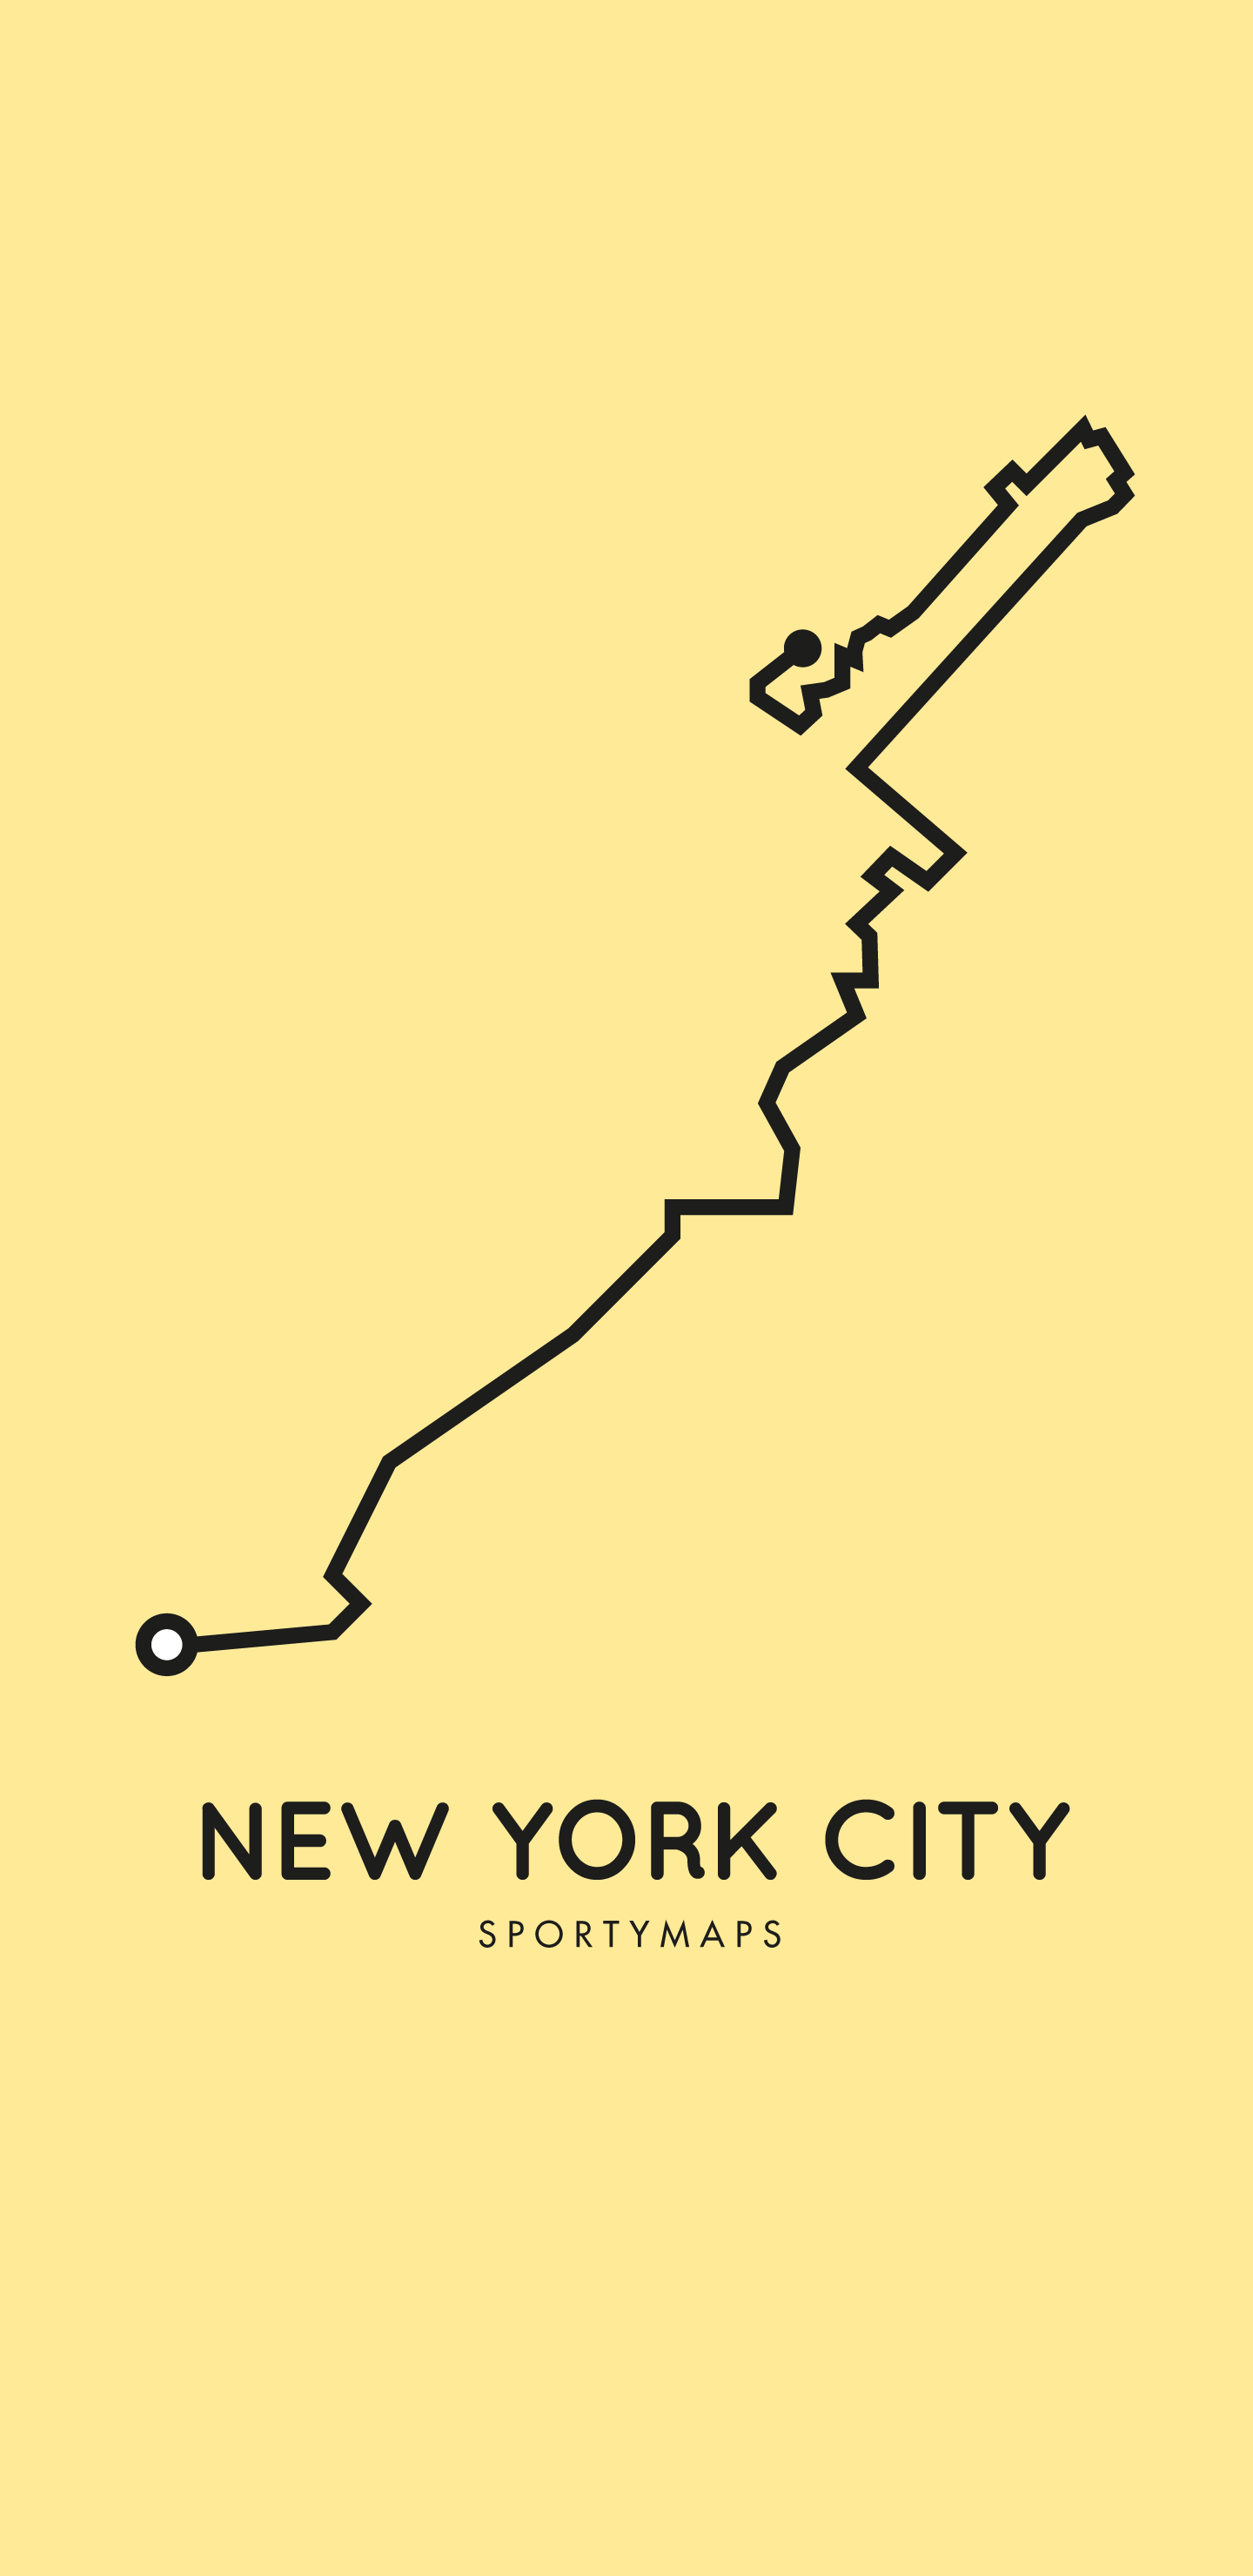 Sportymaps-NYC-marathon-yellow